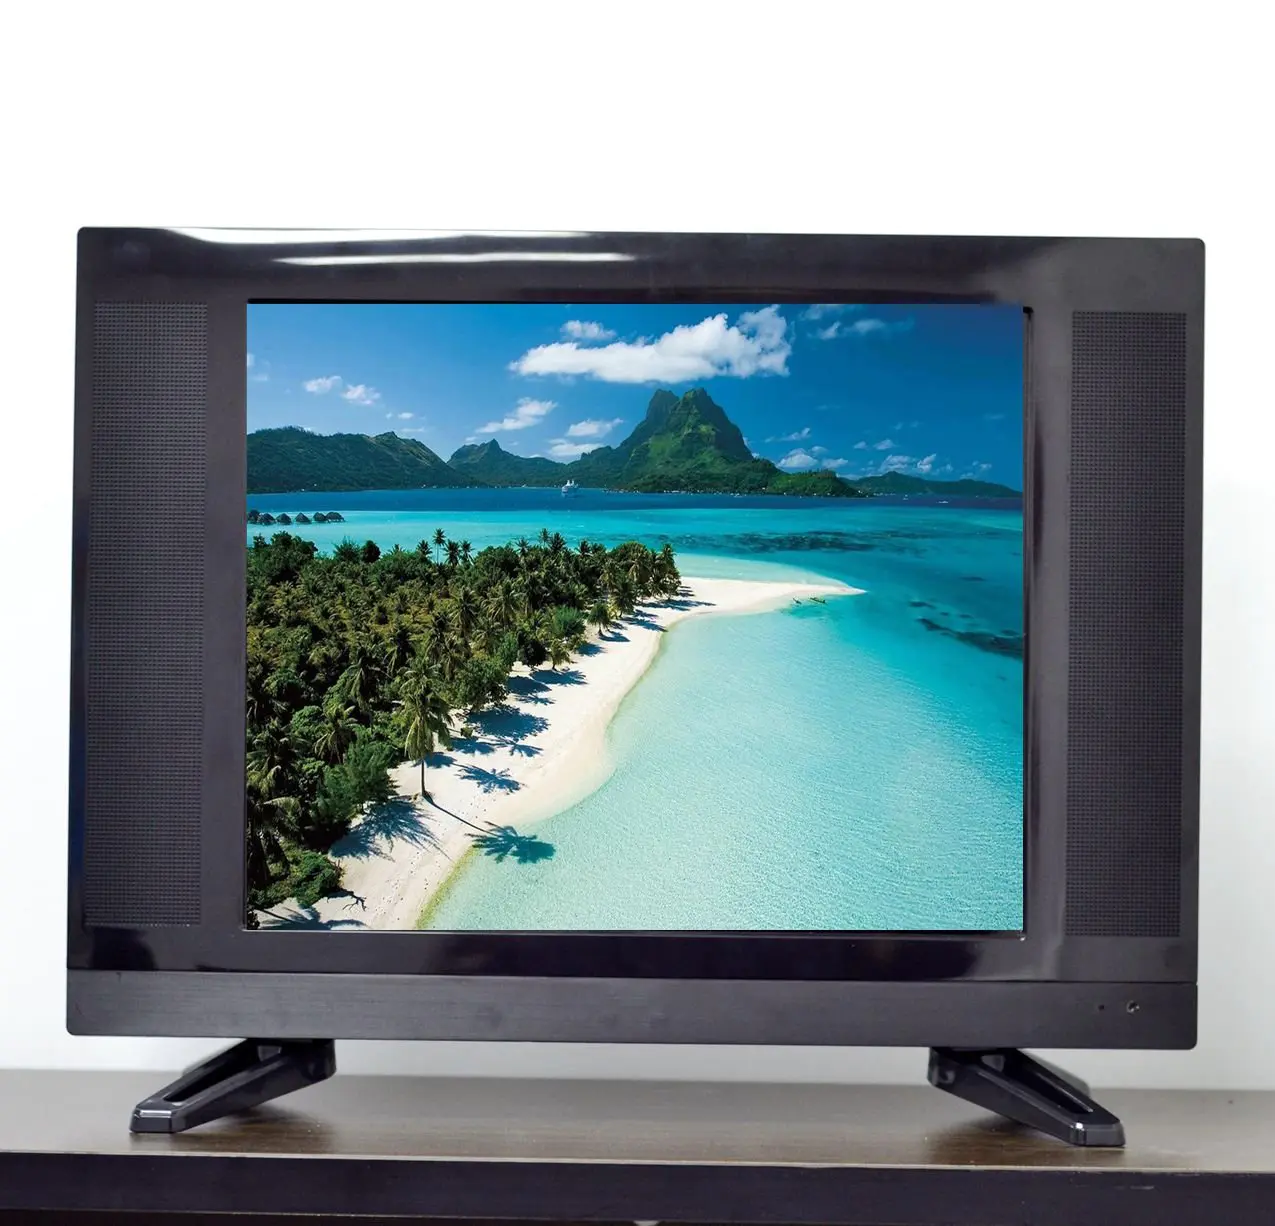 Xinyao LCD 15 lcd tv popular for tv screen